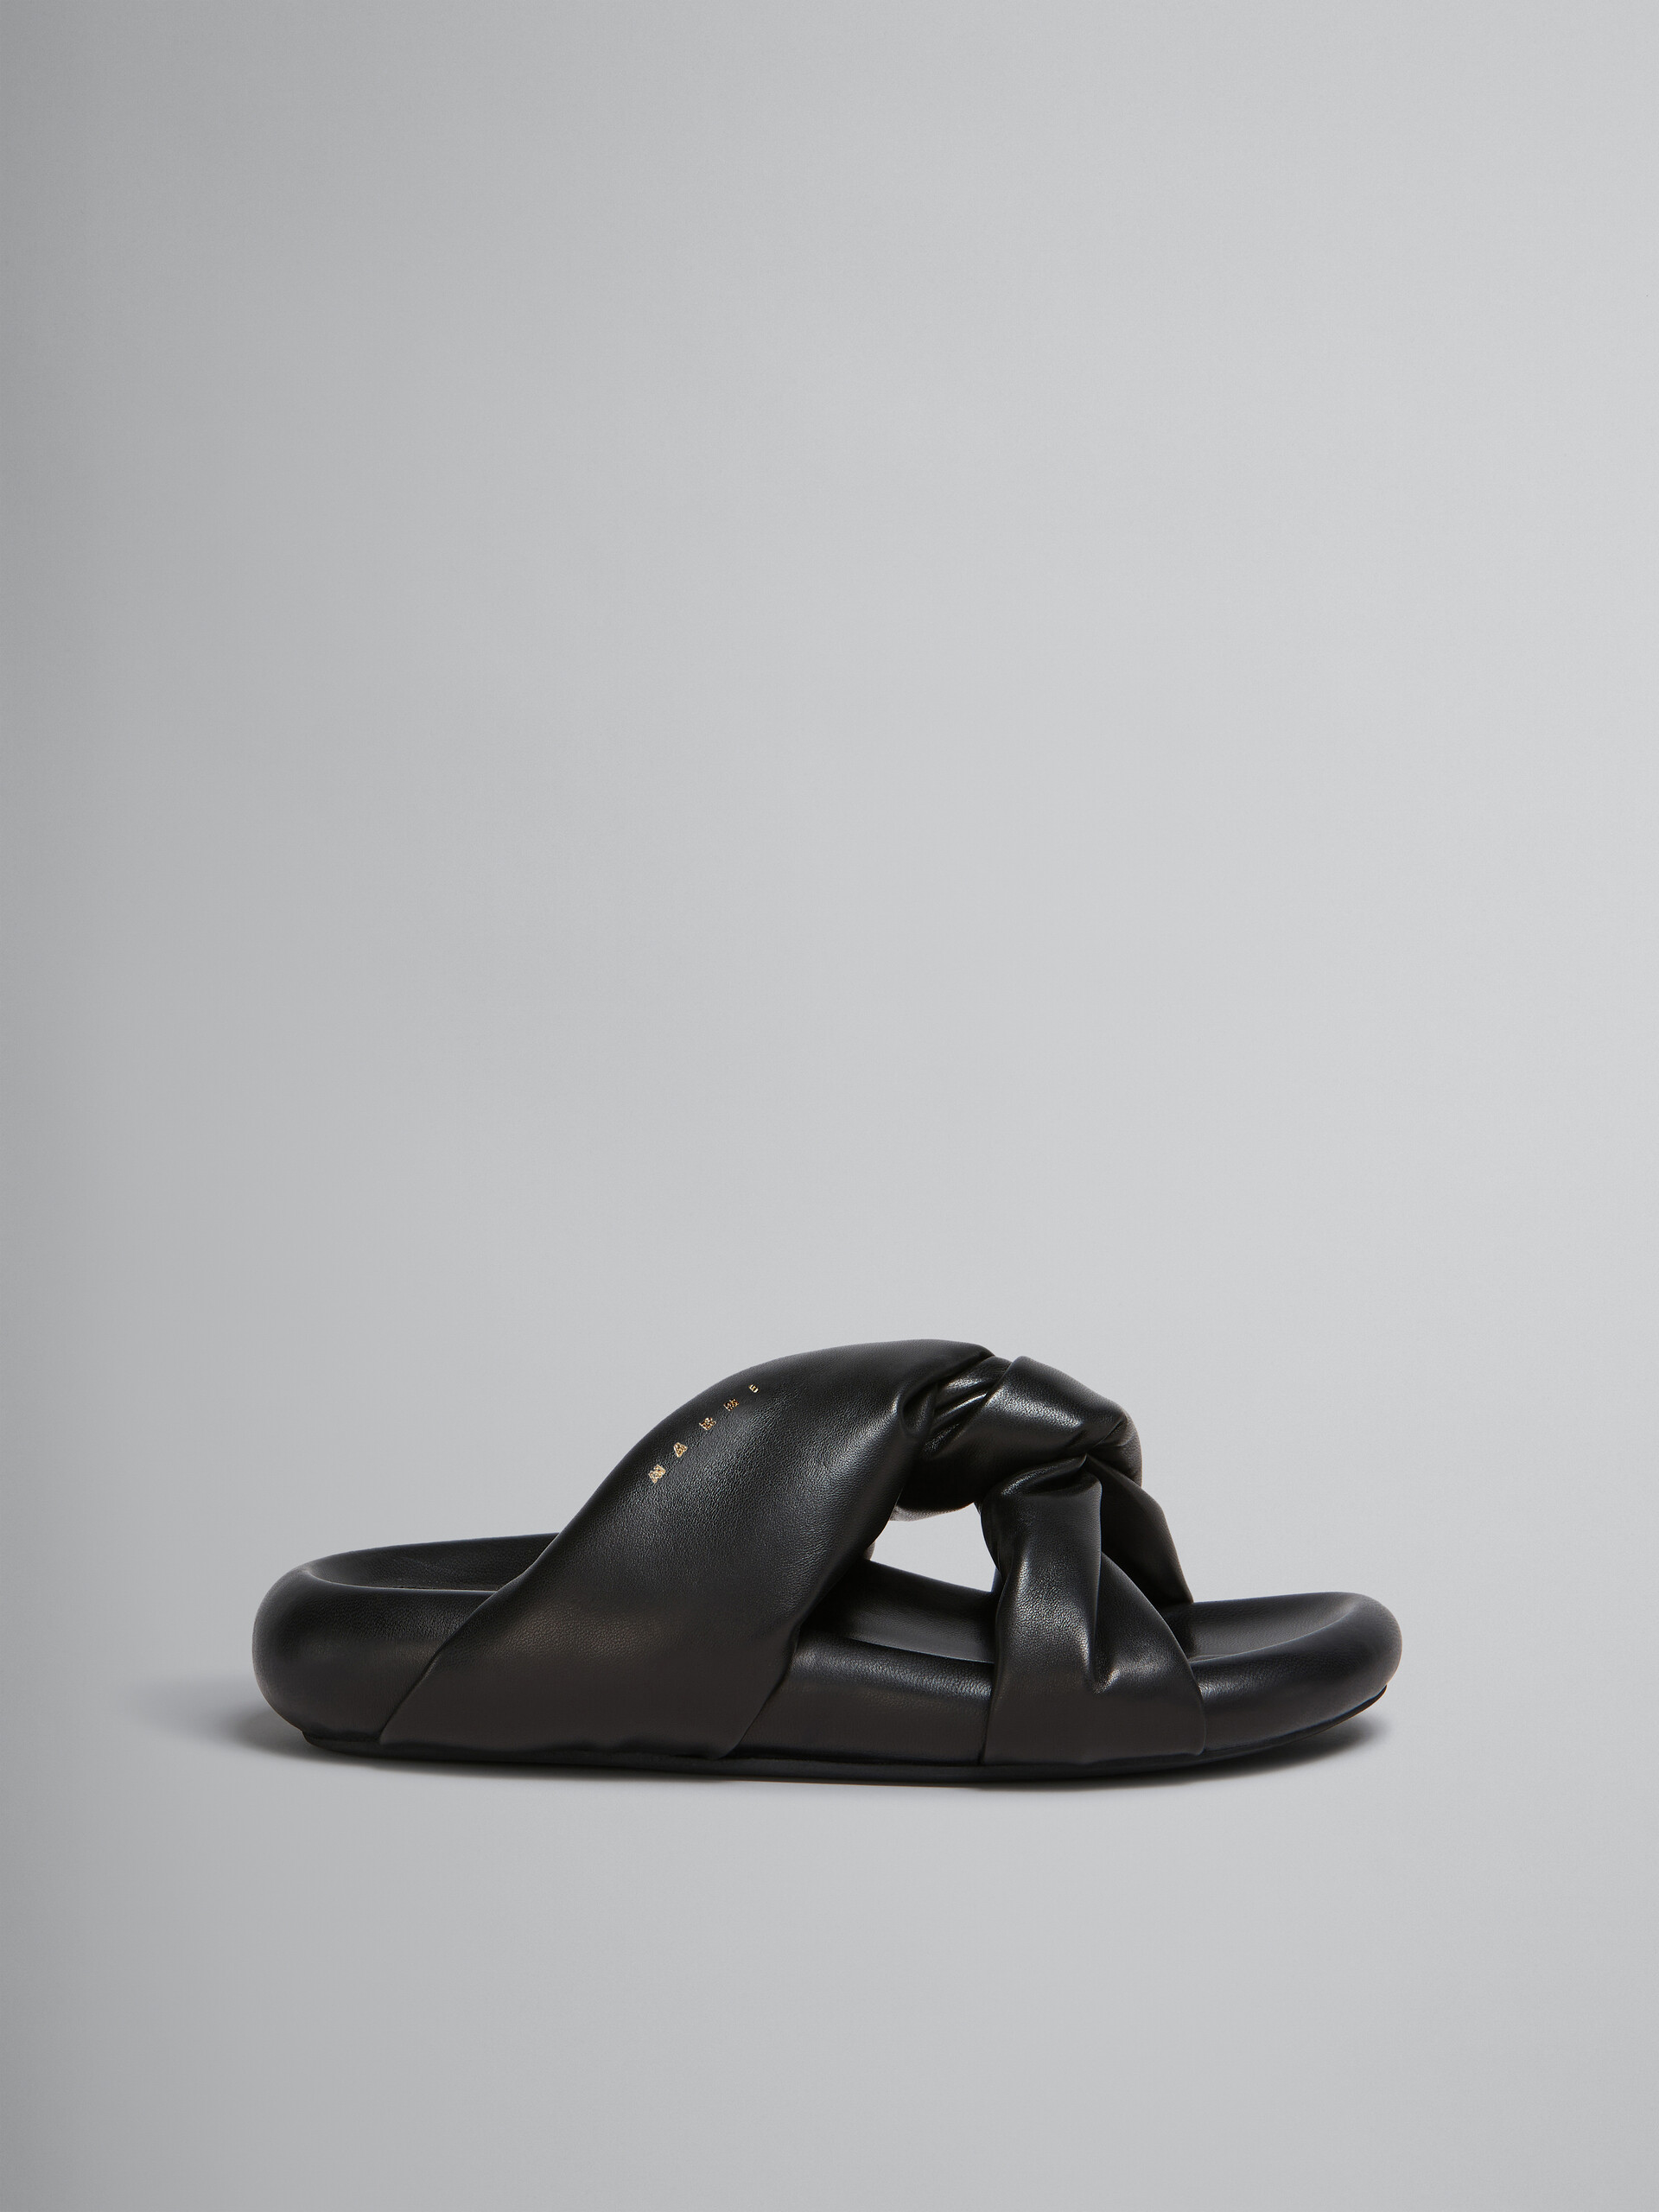 Black twisted leather Bubble sandal - Sandals - Image 1